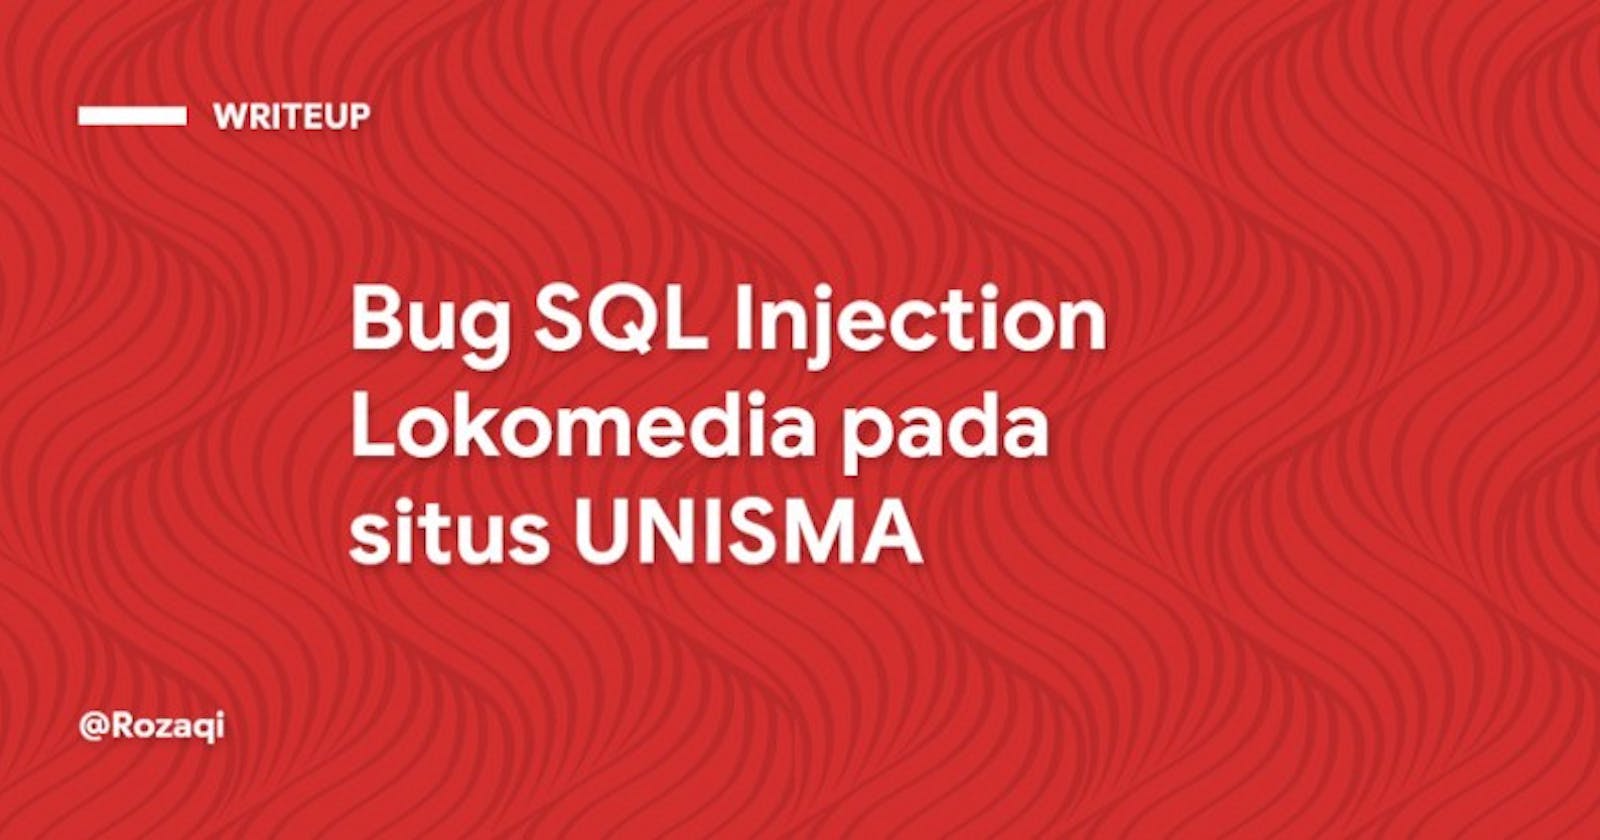 Bug SQL Injection pada situs UNISMA